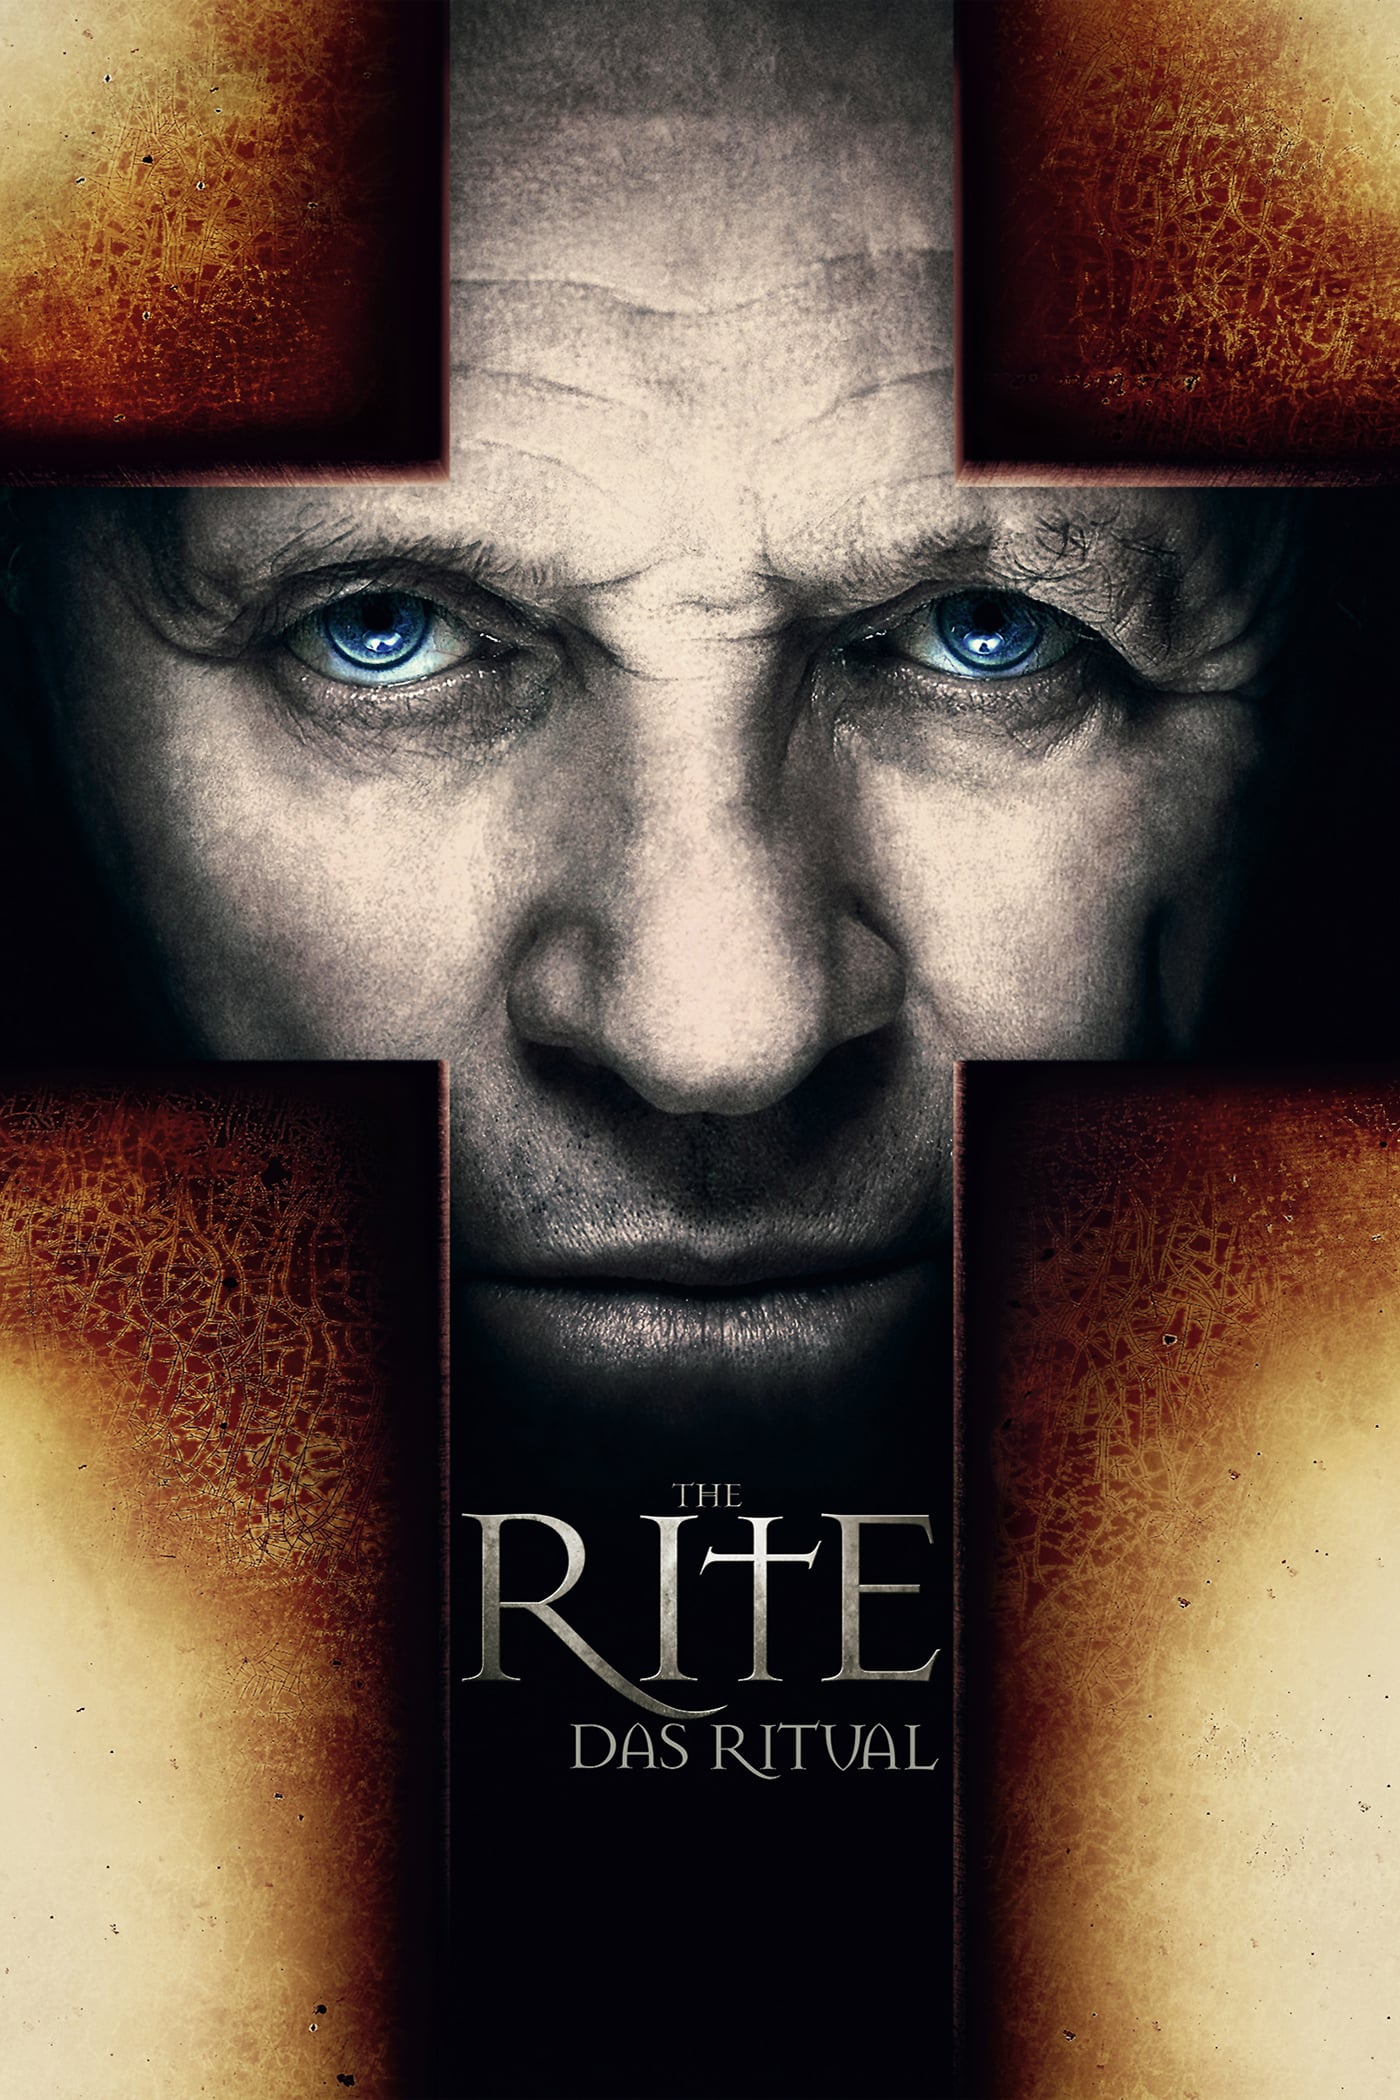 Plakat von "The Rite - Das Ritual"